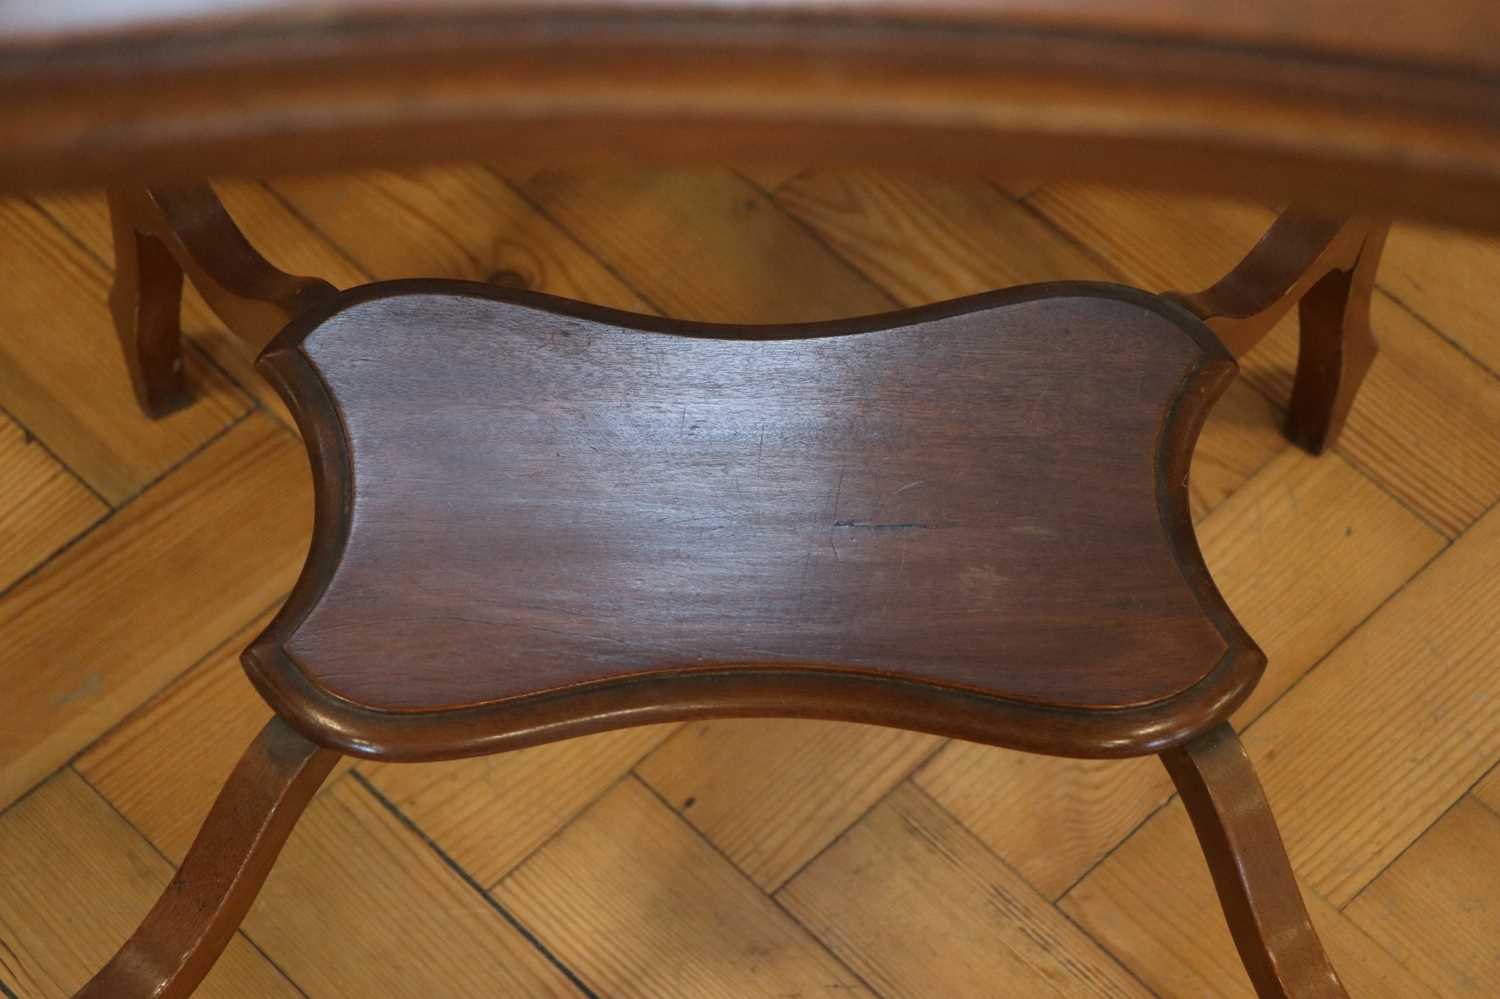 An Edwardian mahogany window table having an undershelf, 68 x 48 x 74 cm - Image 5 of 6